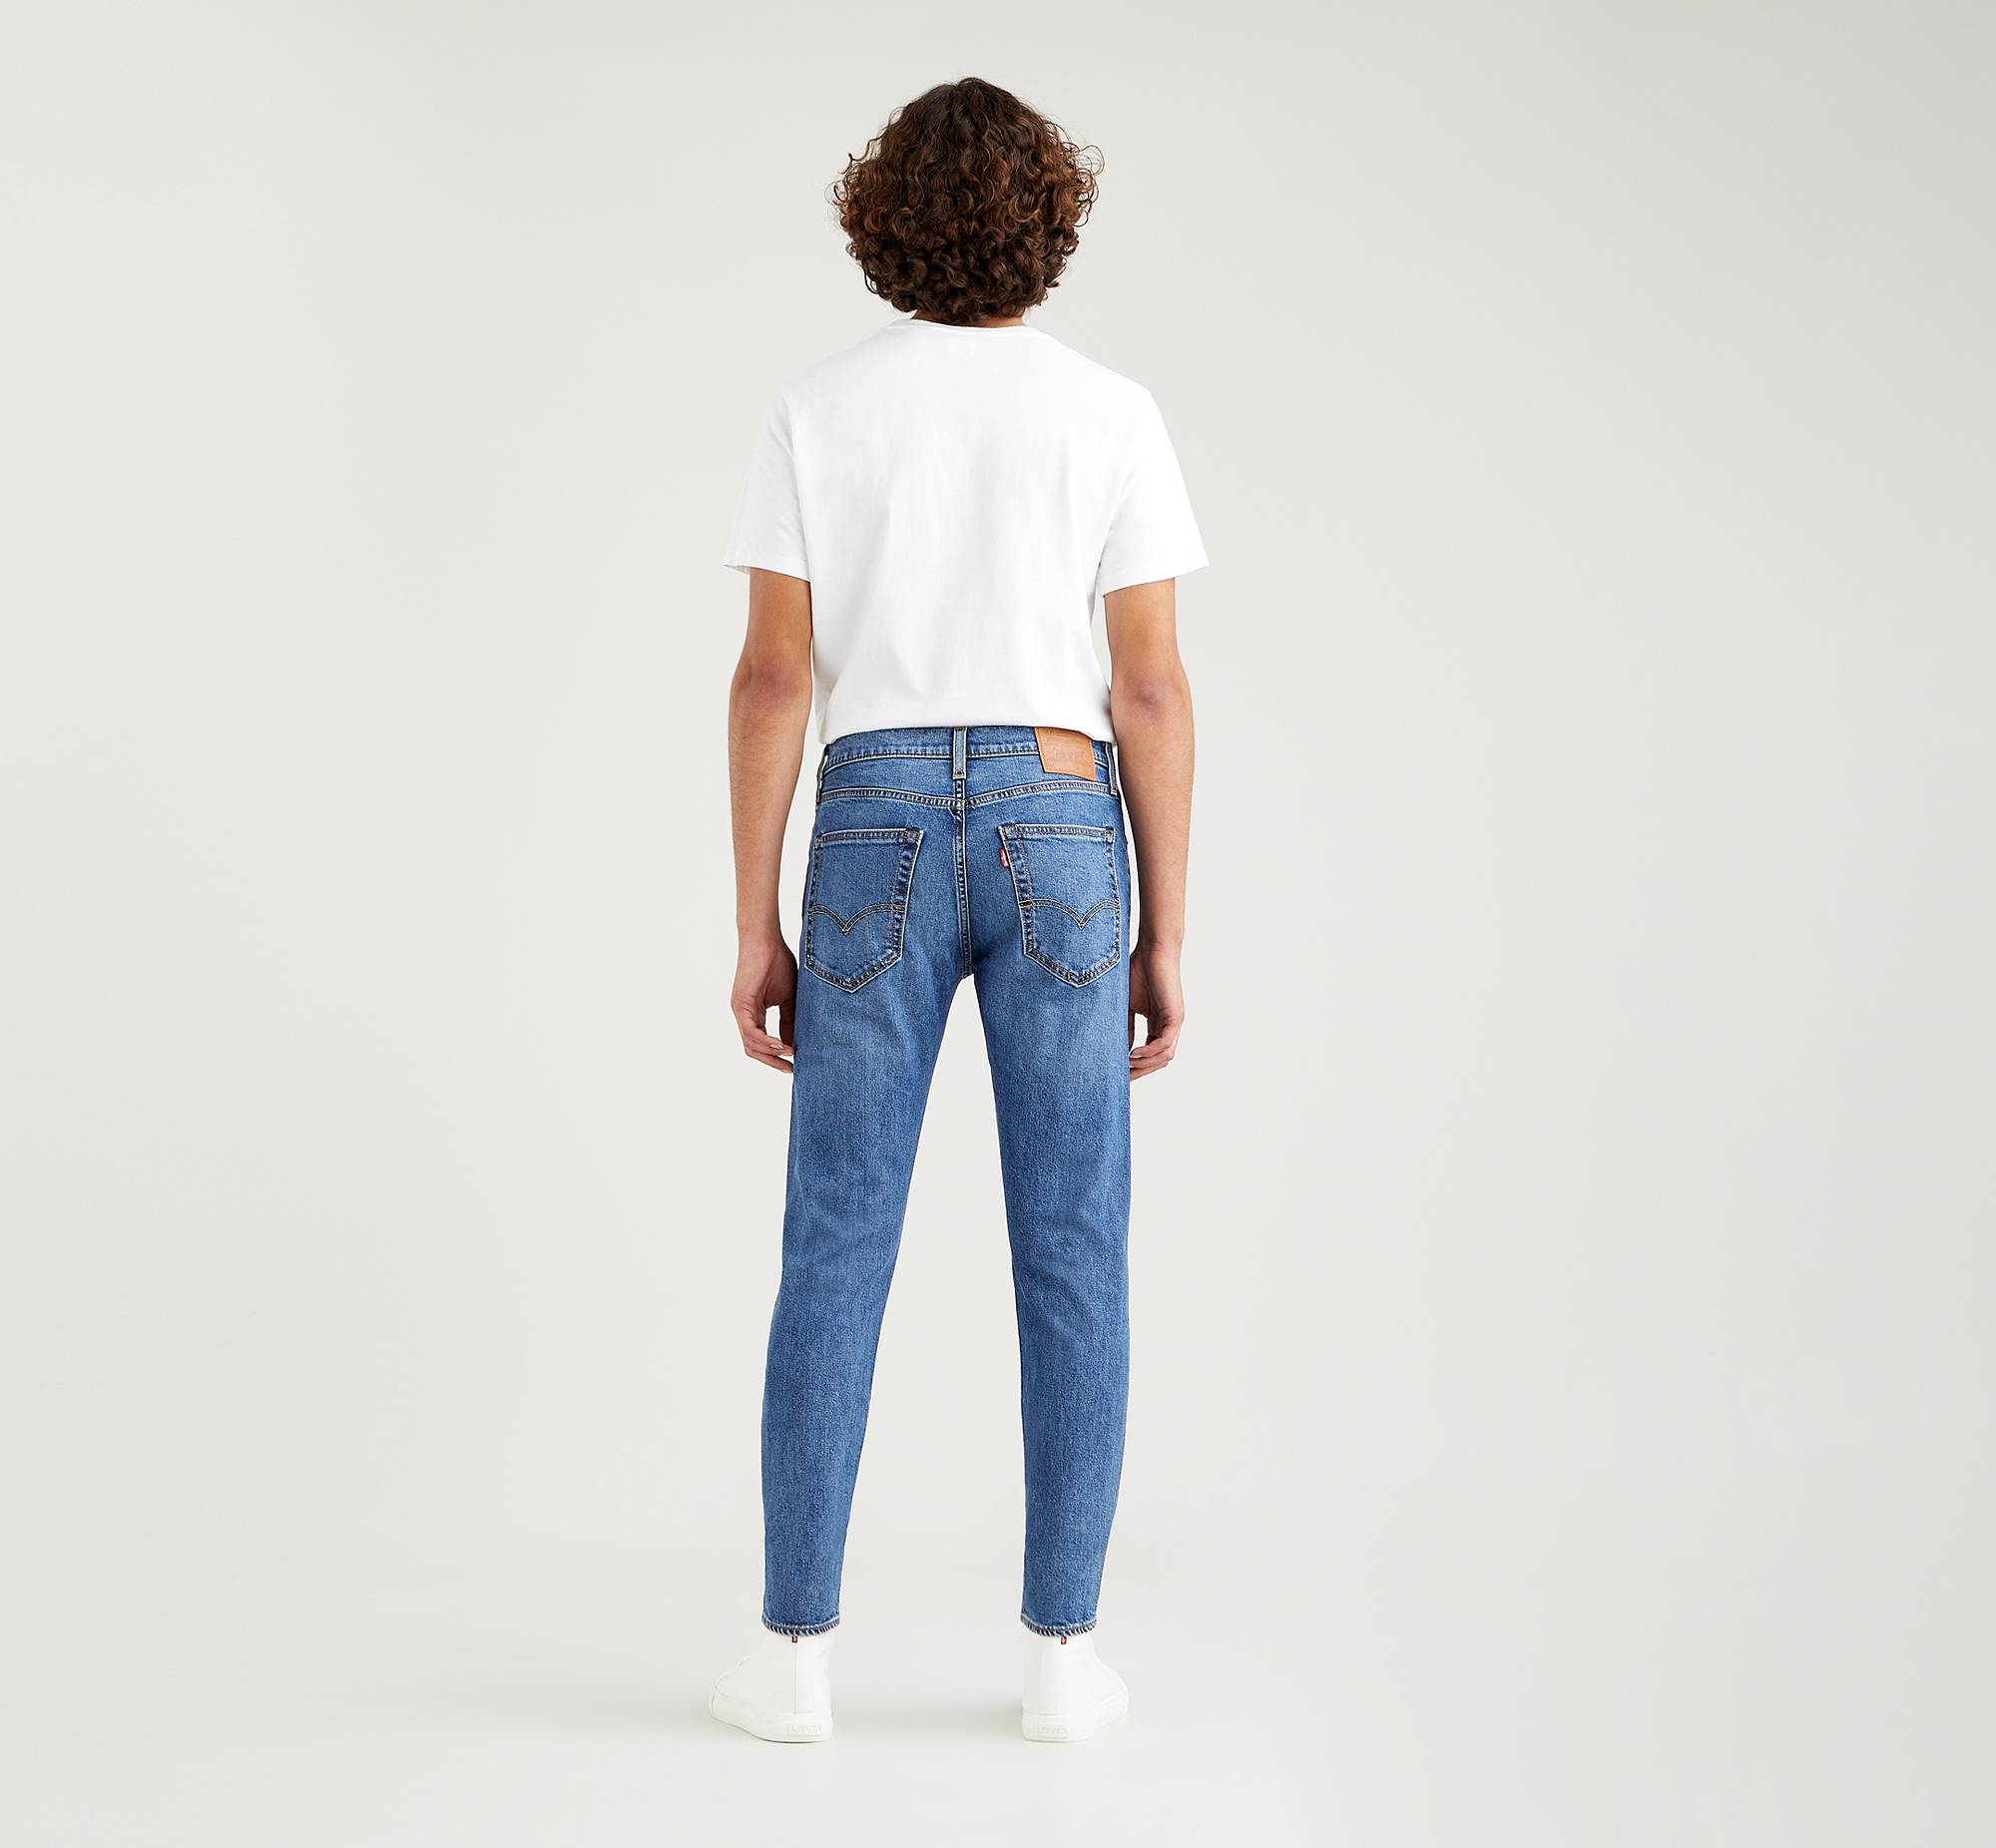 Jeans, Denim & Clothing